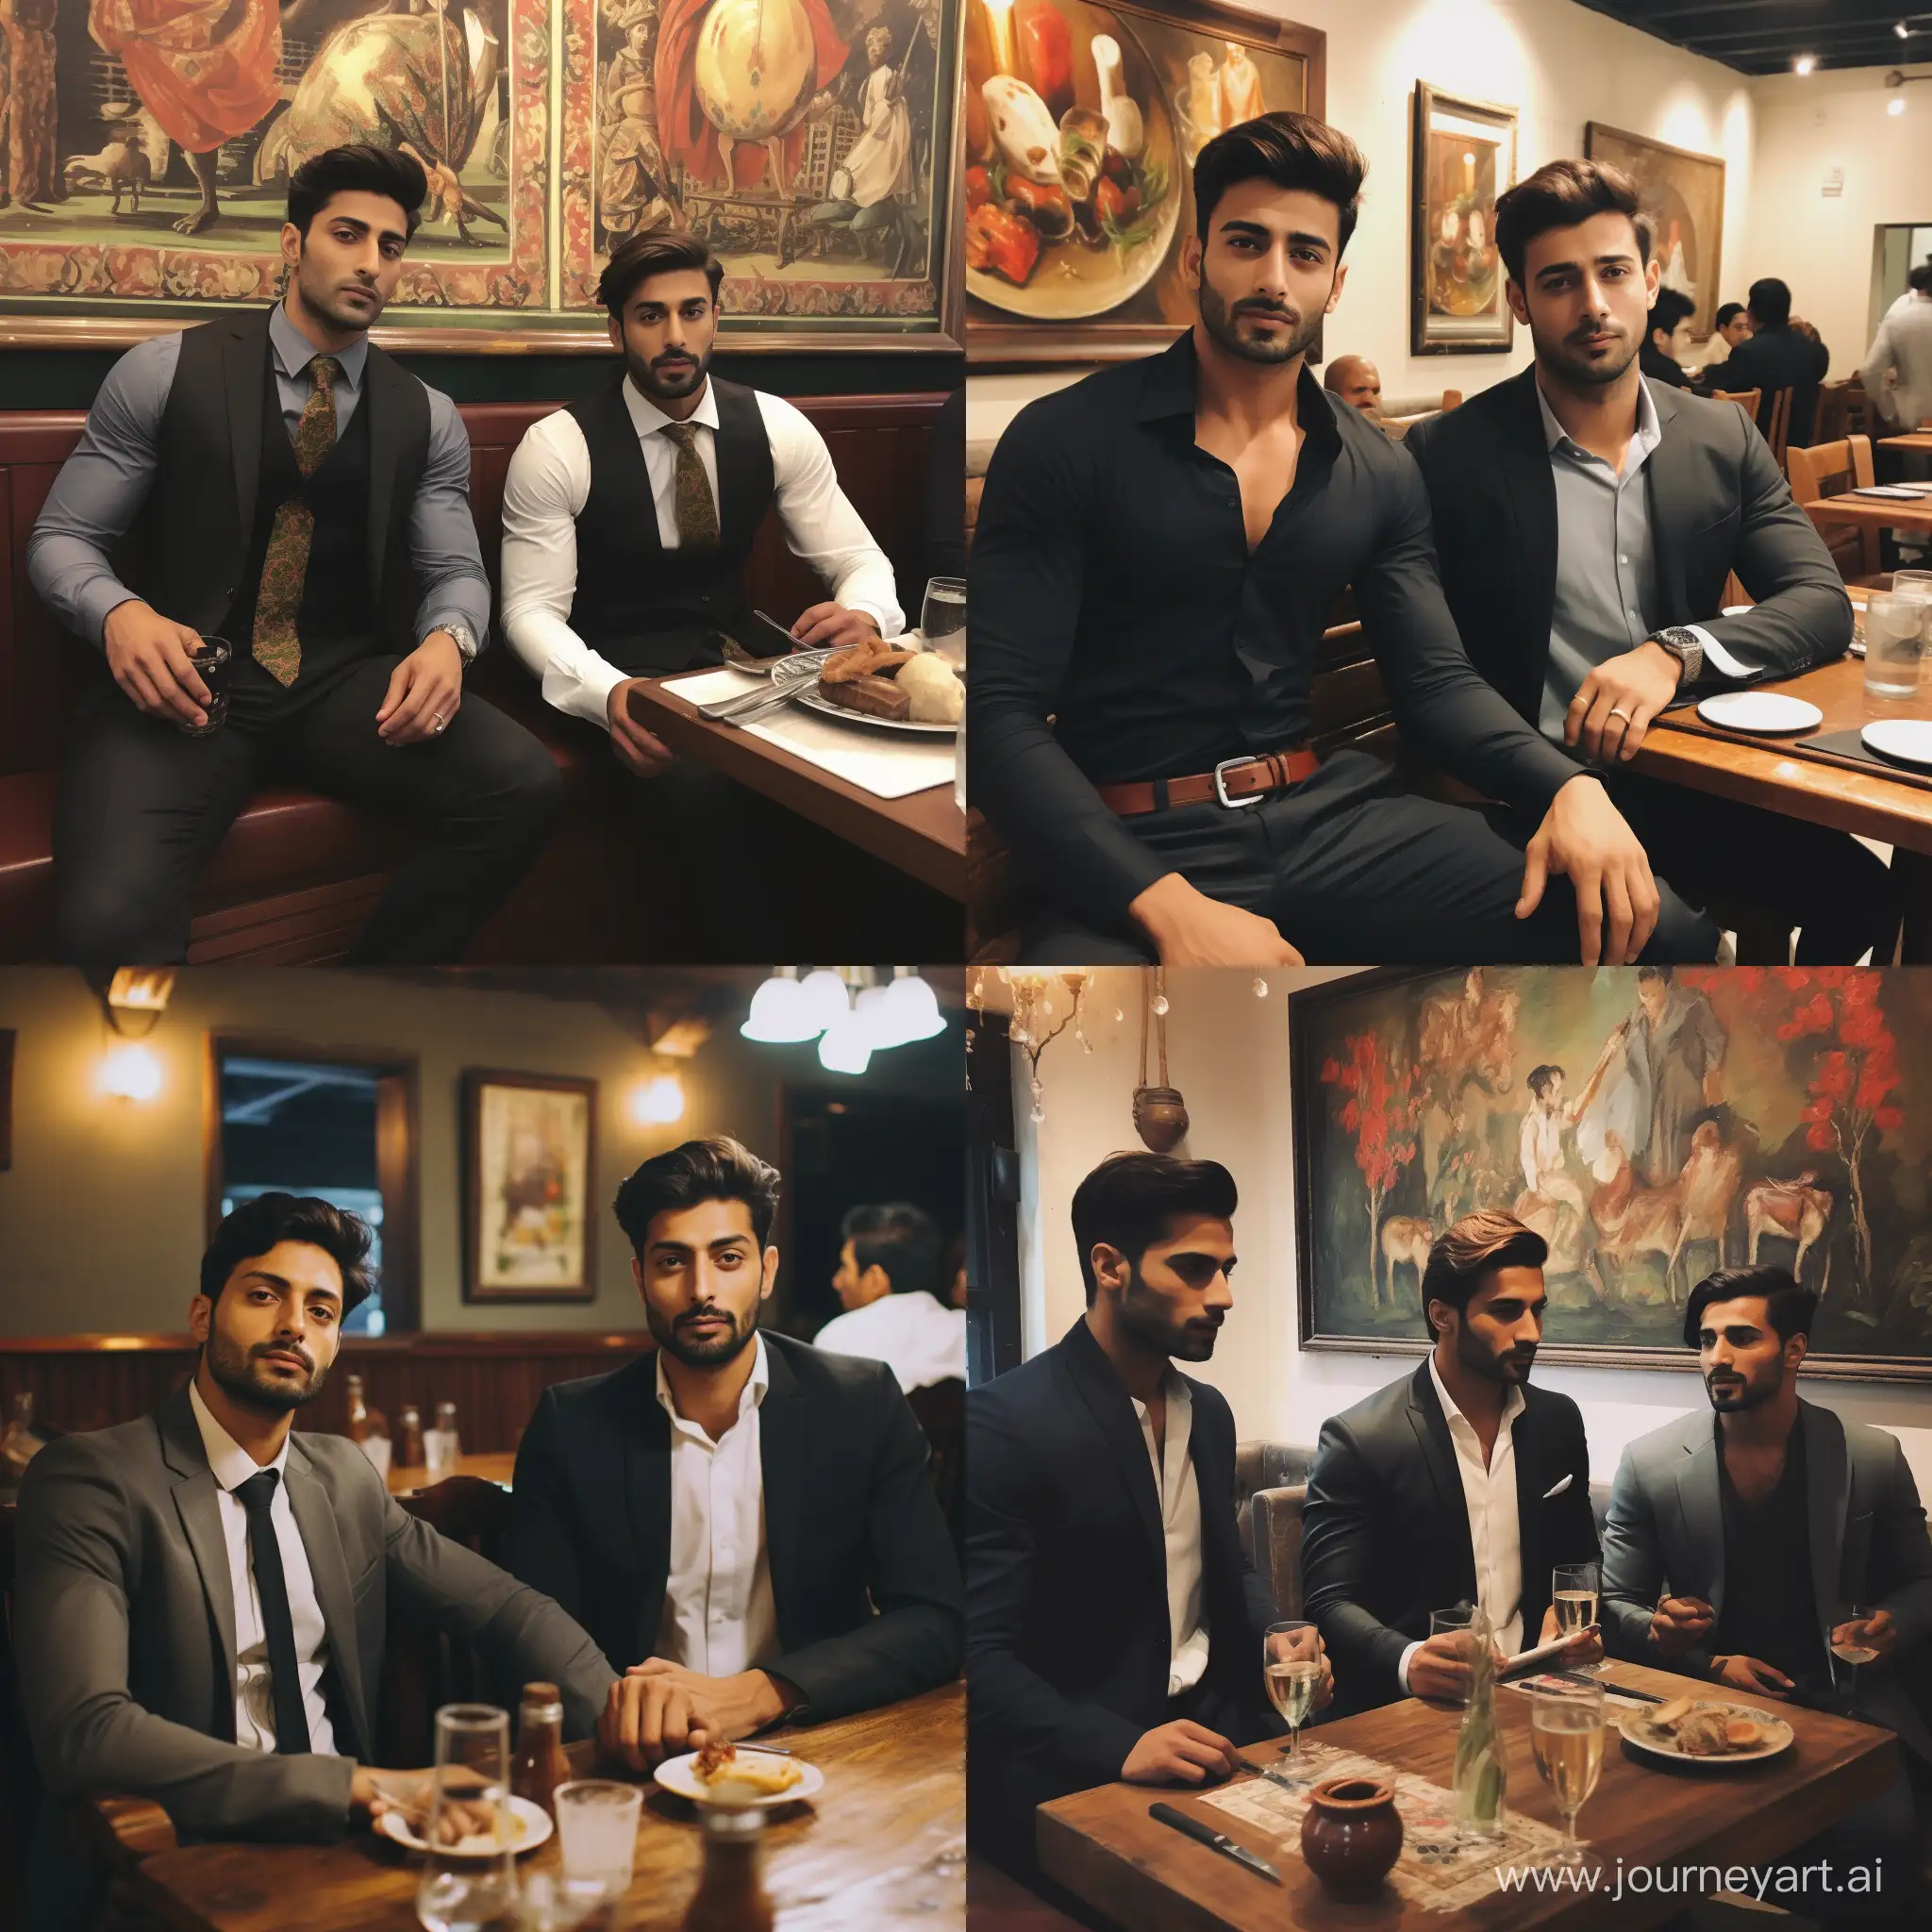 Stylish-Pakistani-Men-Enjoying-a-Leisurely-Moment-in-Chic-Restaurant